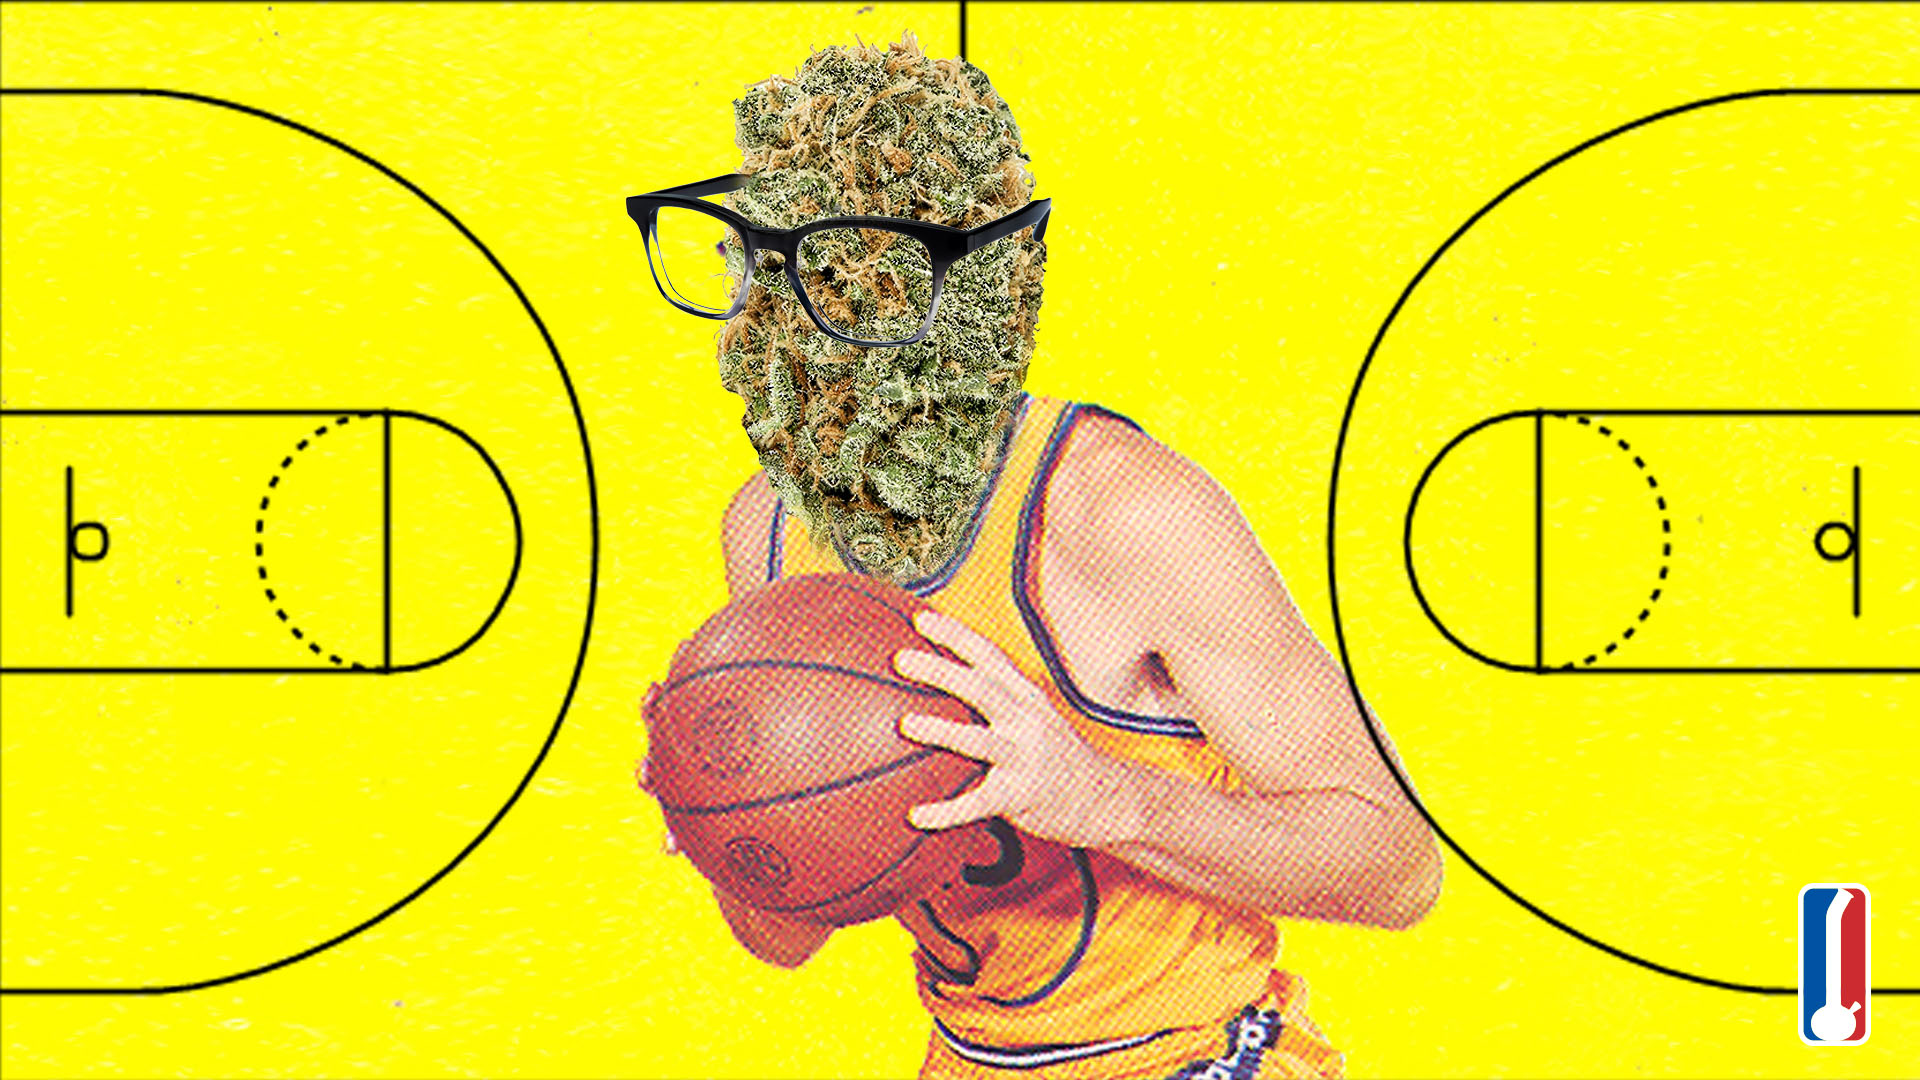 NBA doesn't like cannabis